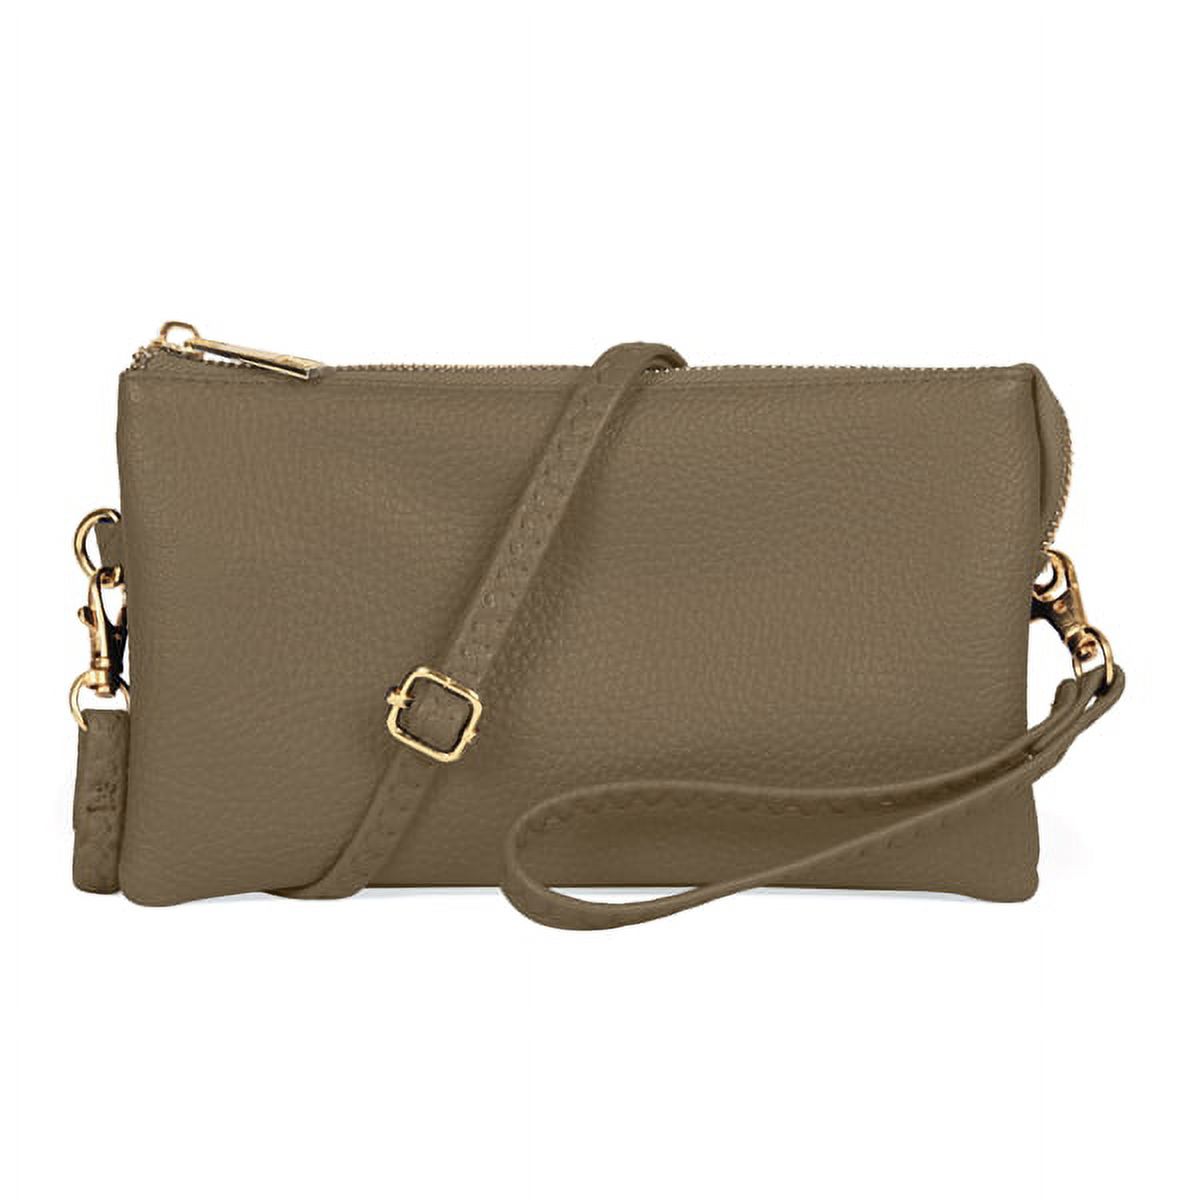 Riah Fashion Convertible Vegan Leather Wallet Purse Clutch - Small Handbag Phone/Card Slots & Detachable Wristlet/Shoulder/Crossbody Strap - image 1 of 1